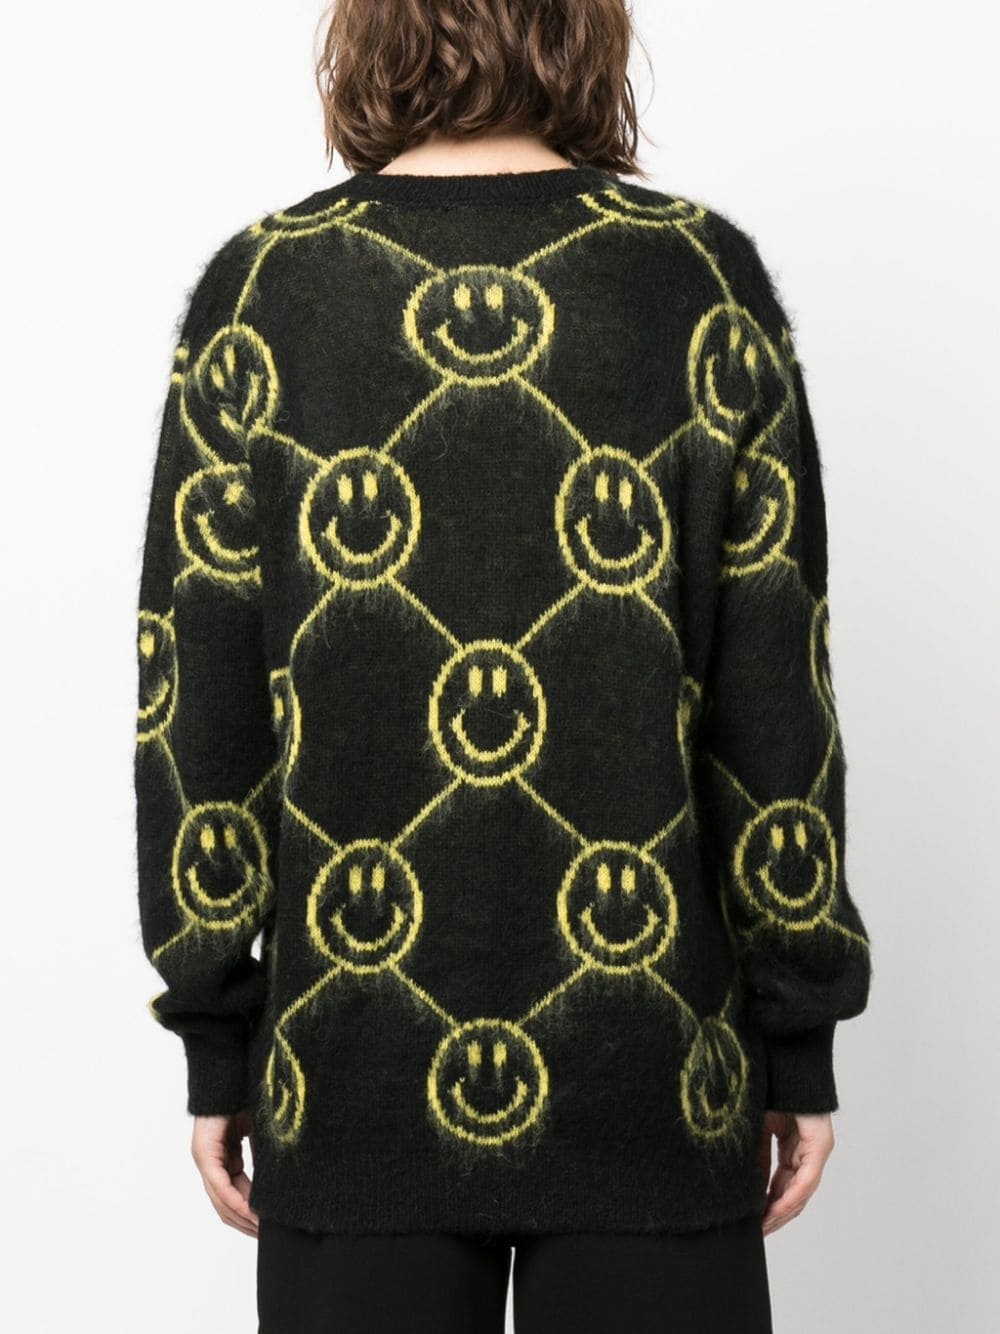 smiley-face intarsia-knit jumper - 4